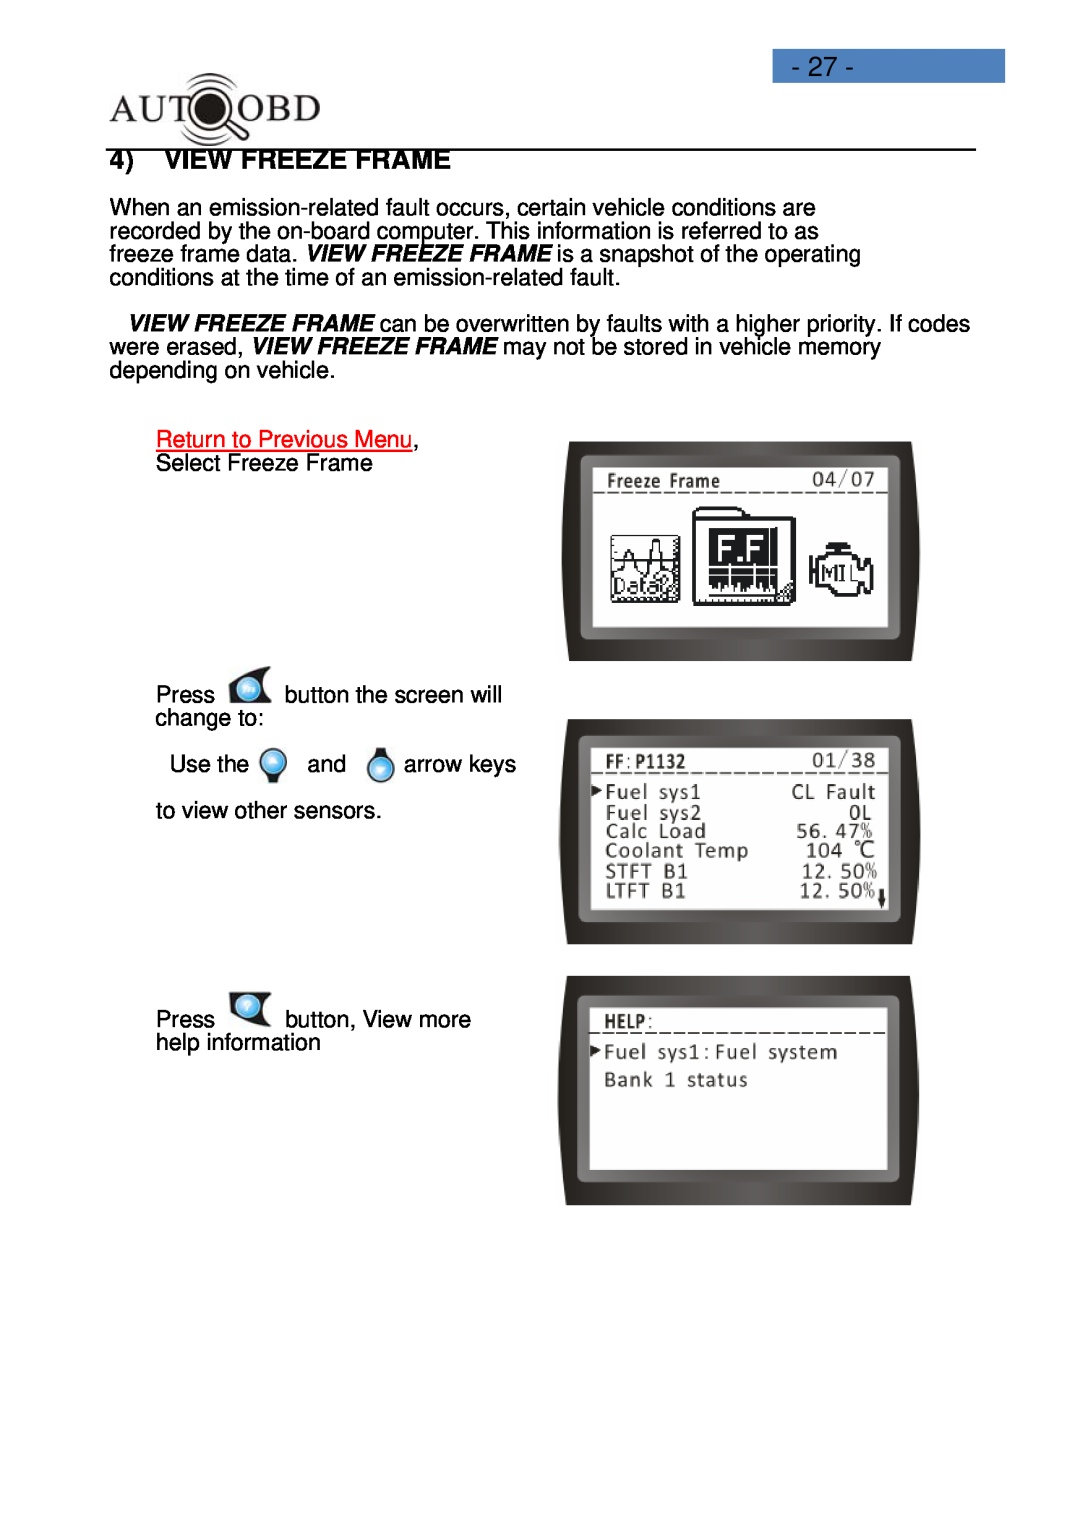 Daewoo AD100 user manual View Freeze Frame, Return to Previous Menu 